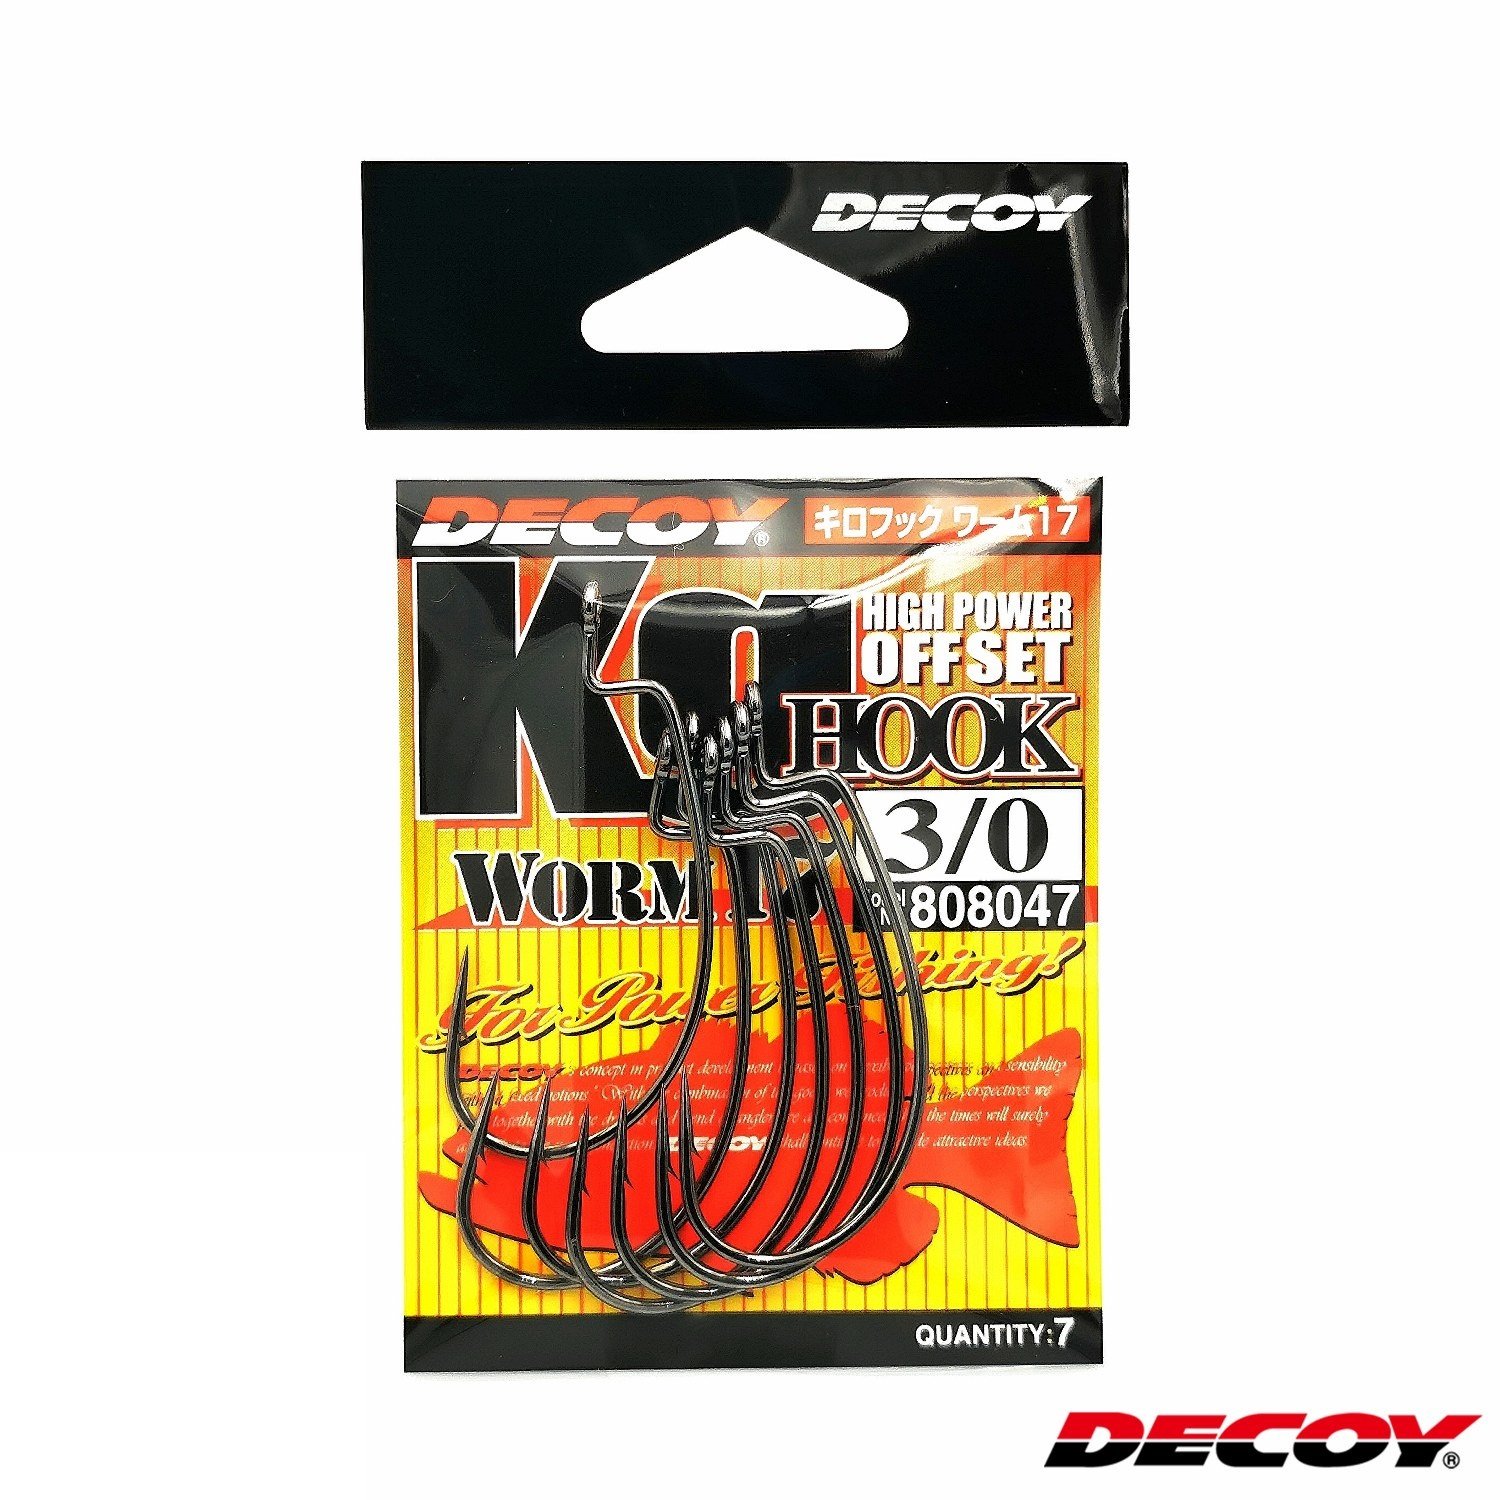 DECOY Worm 17 Kg Hook #5/0